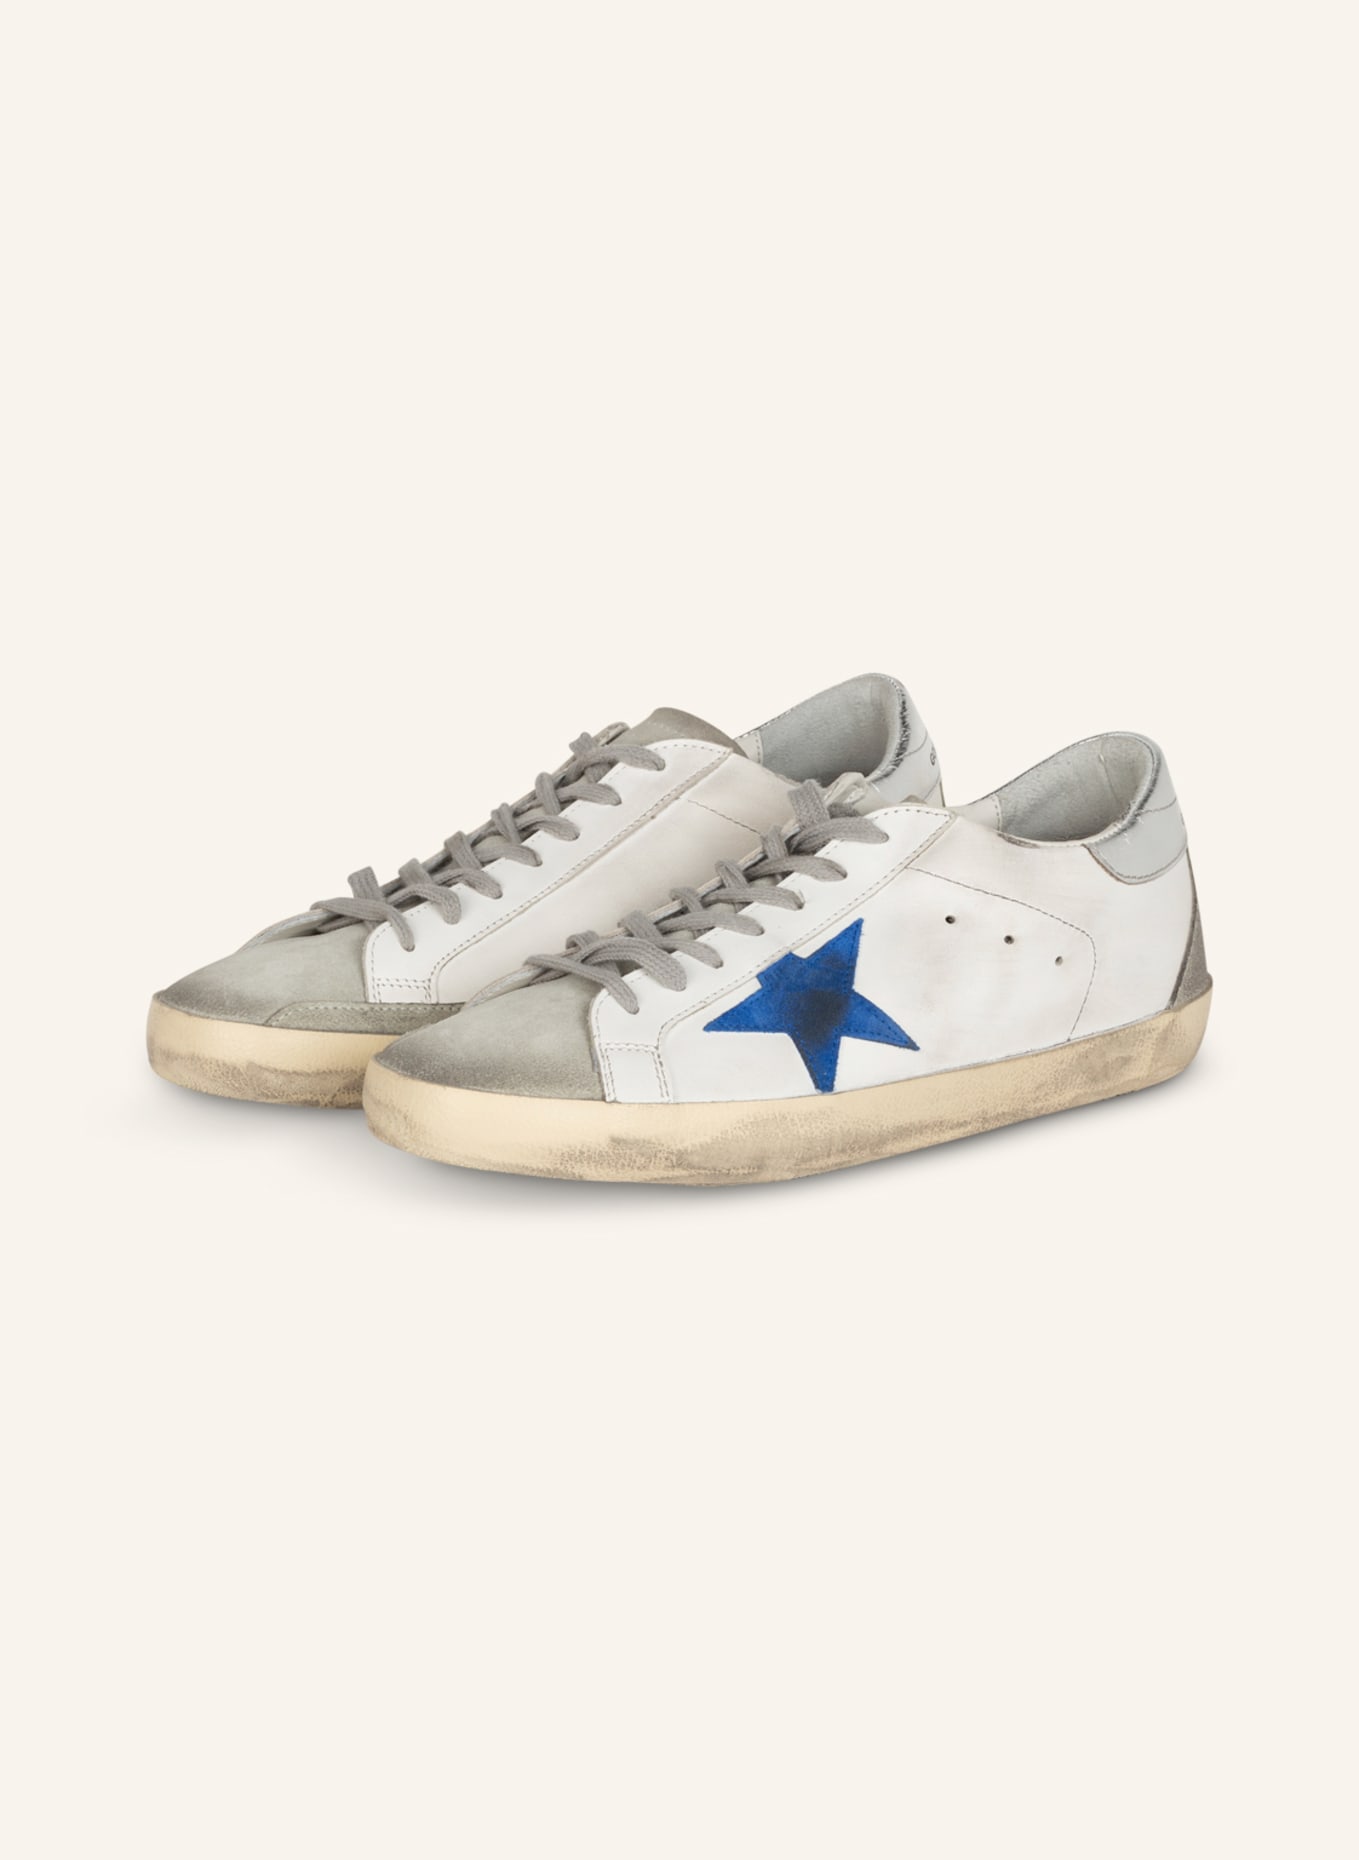 GOLDEN GOOSE Sneakers SUPER-STAR in white/ gray/ blue